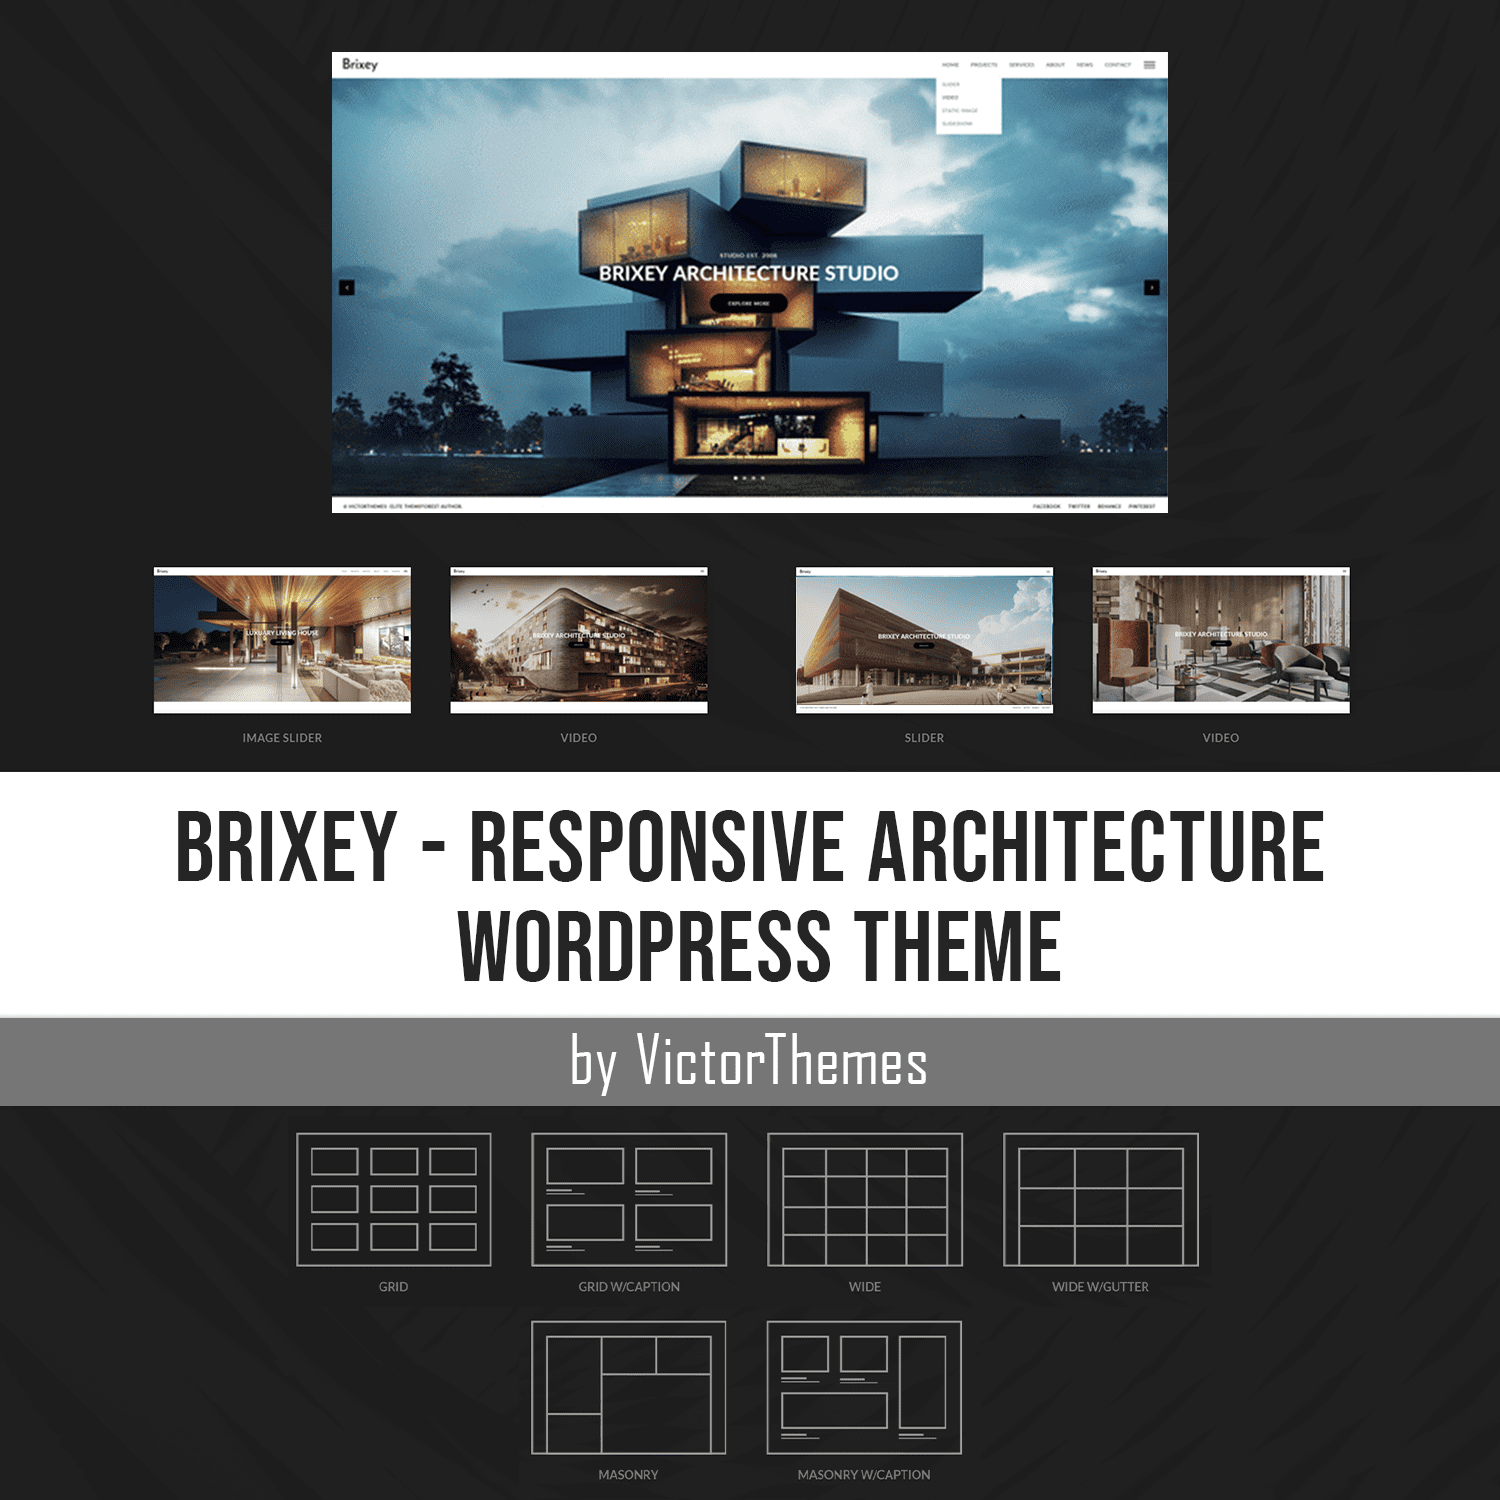 Brixey – Responsive Architecture WordPress Theme Cover.